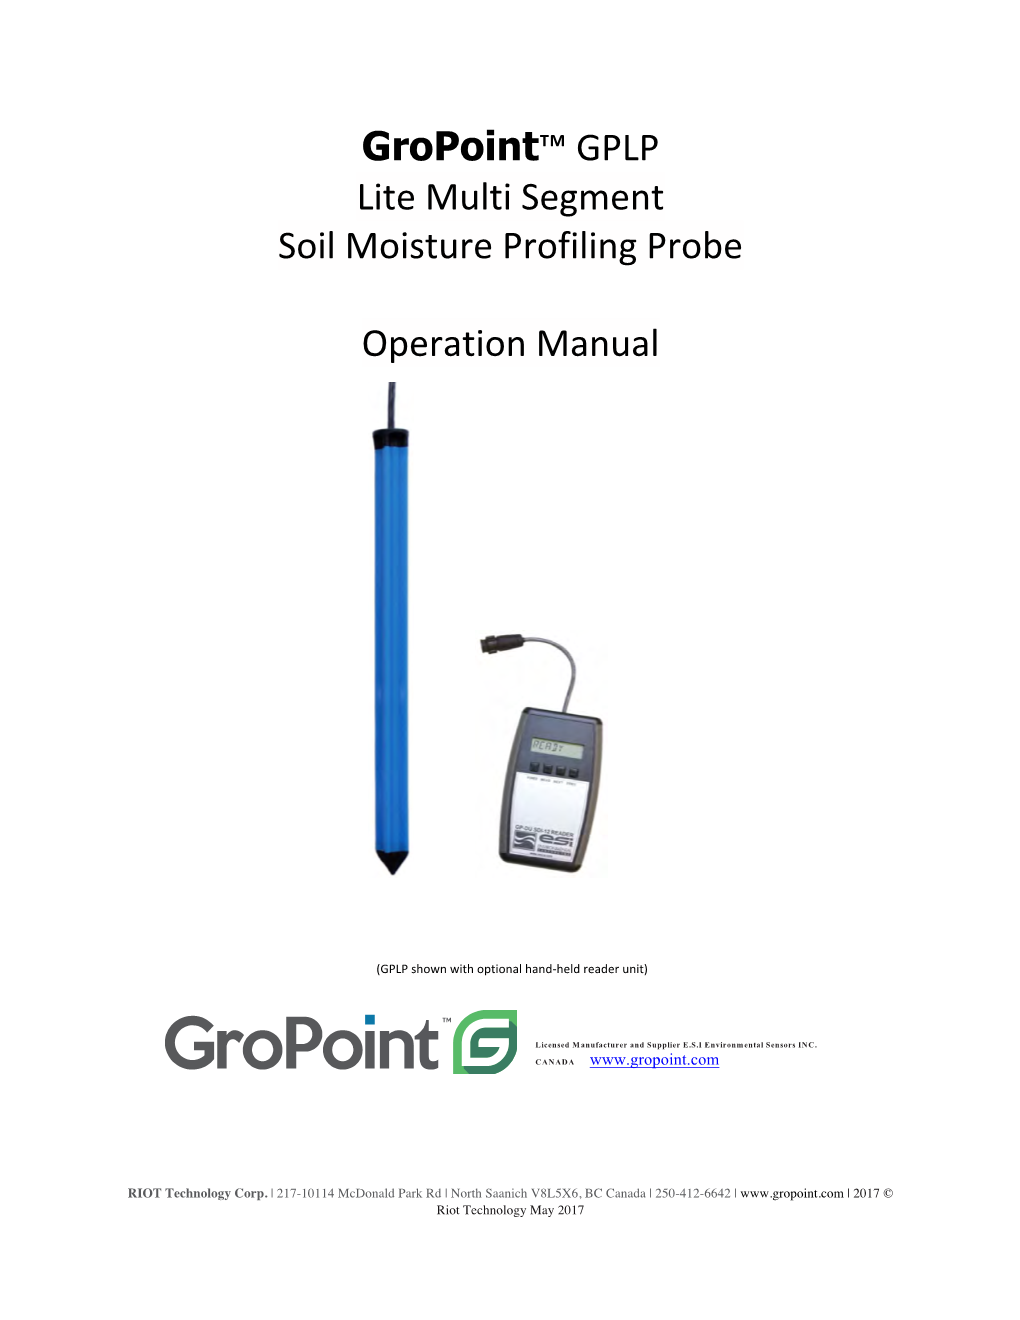 Gropoint™ GPLP Lite Multi Segment Soil Moisture Profiling Probe